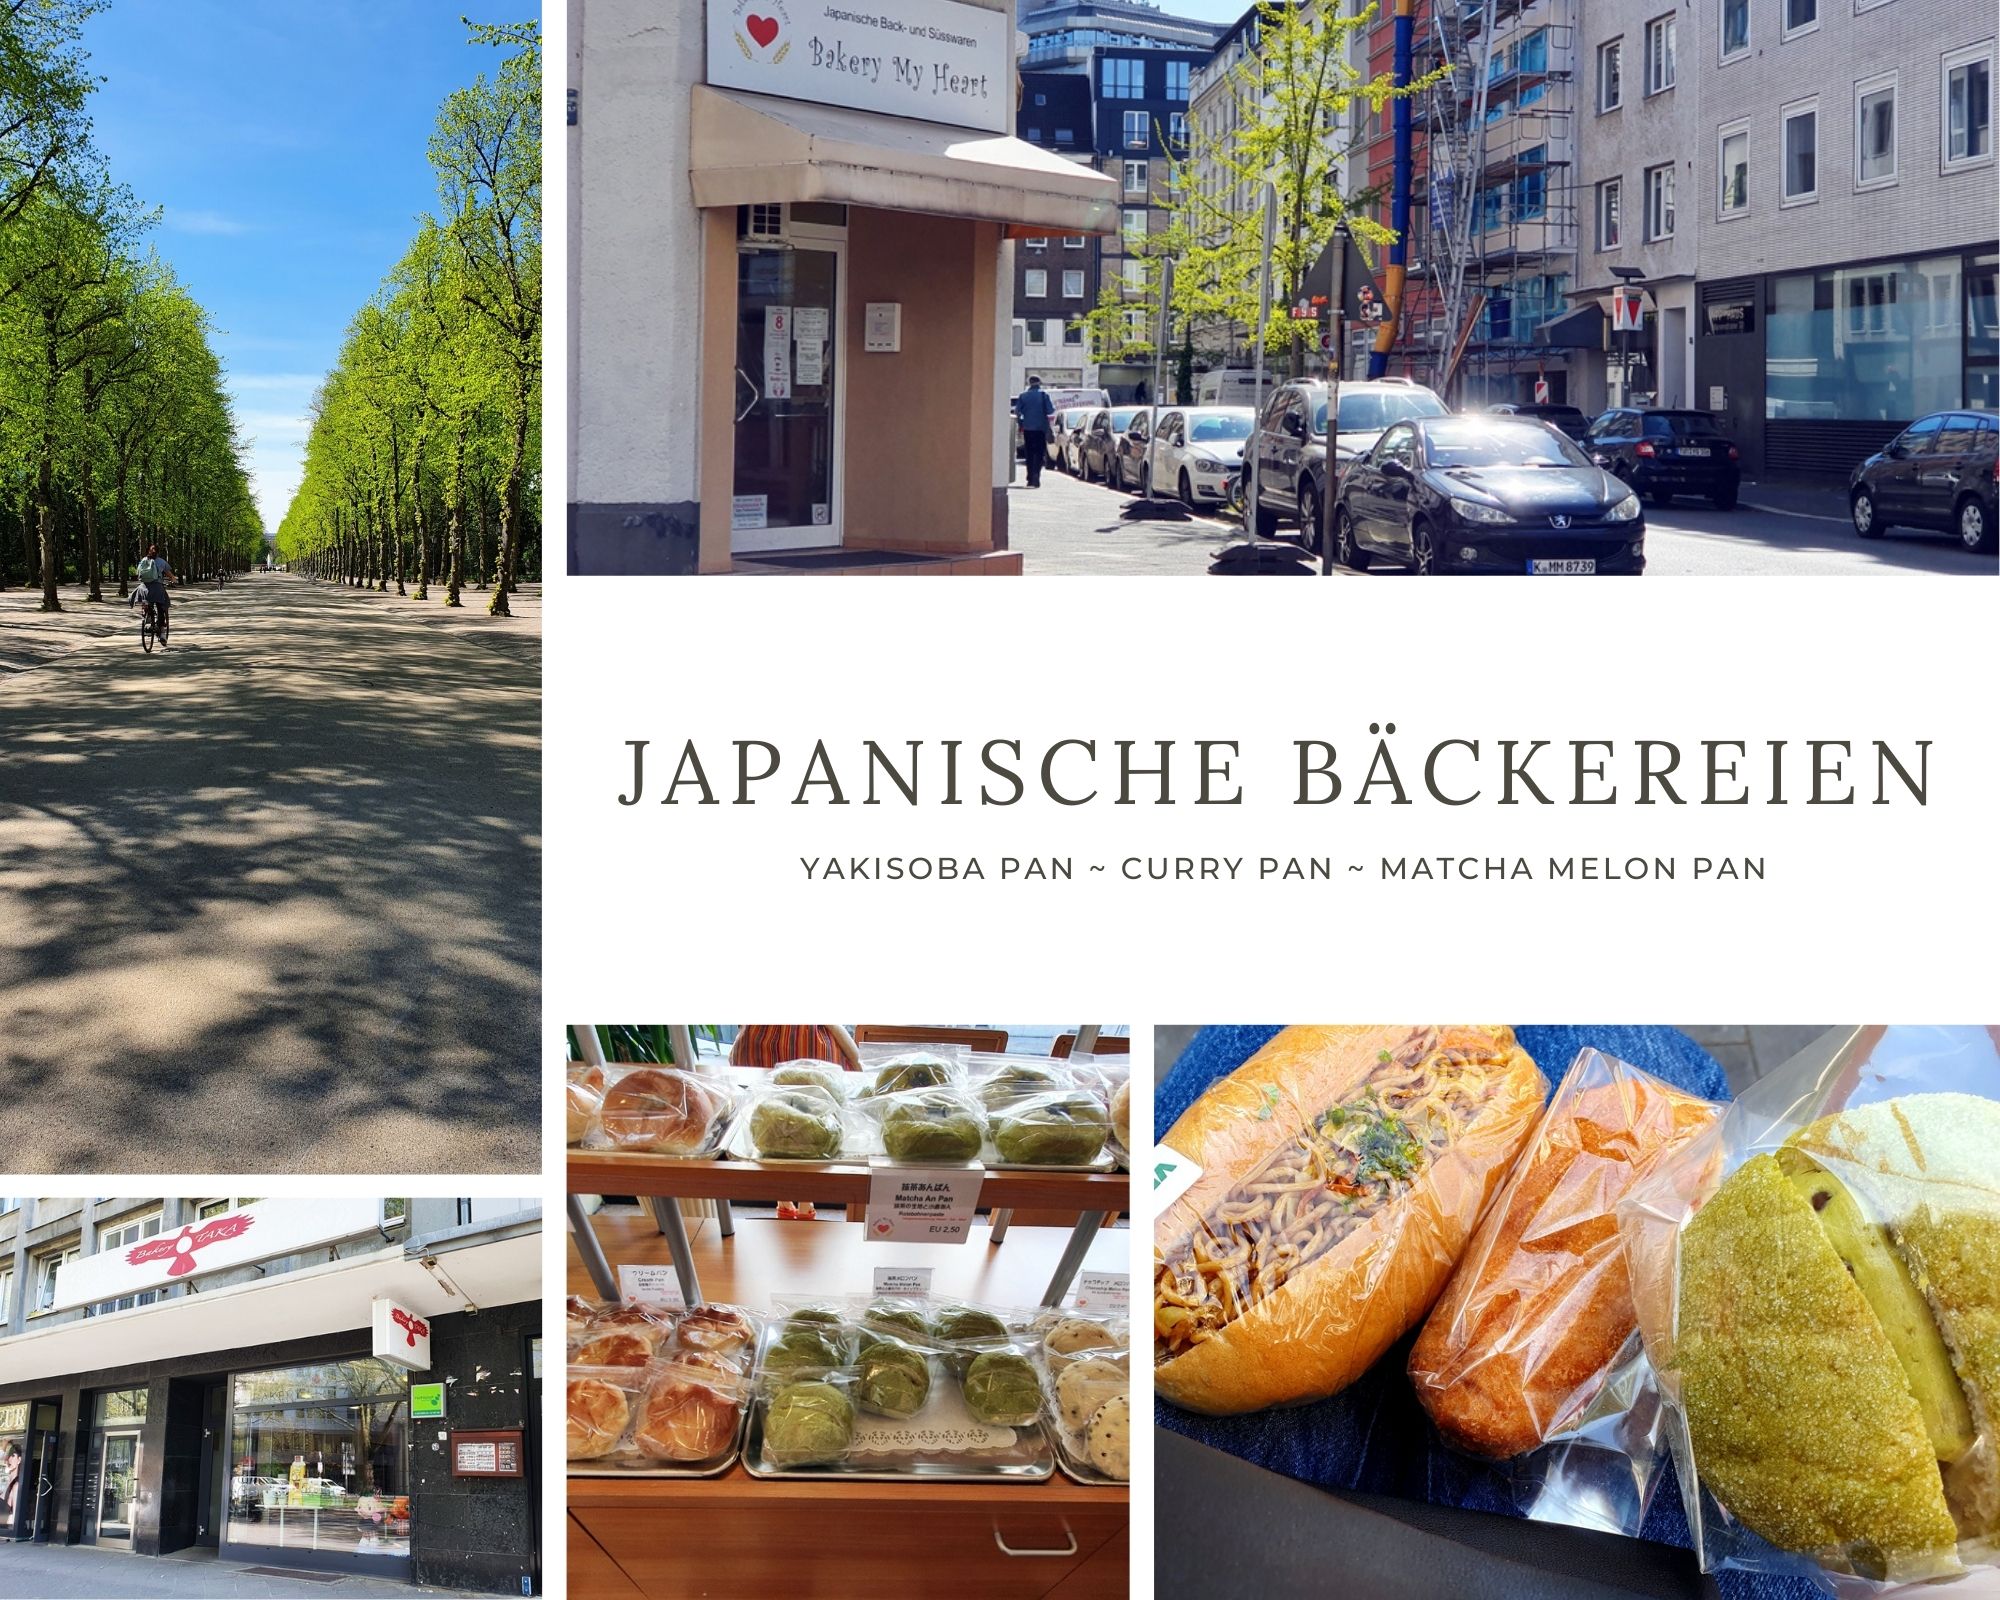 Japanische Baeckerei_Duesseldorf_Backery my heart_Bakery Taka